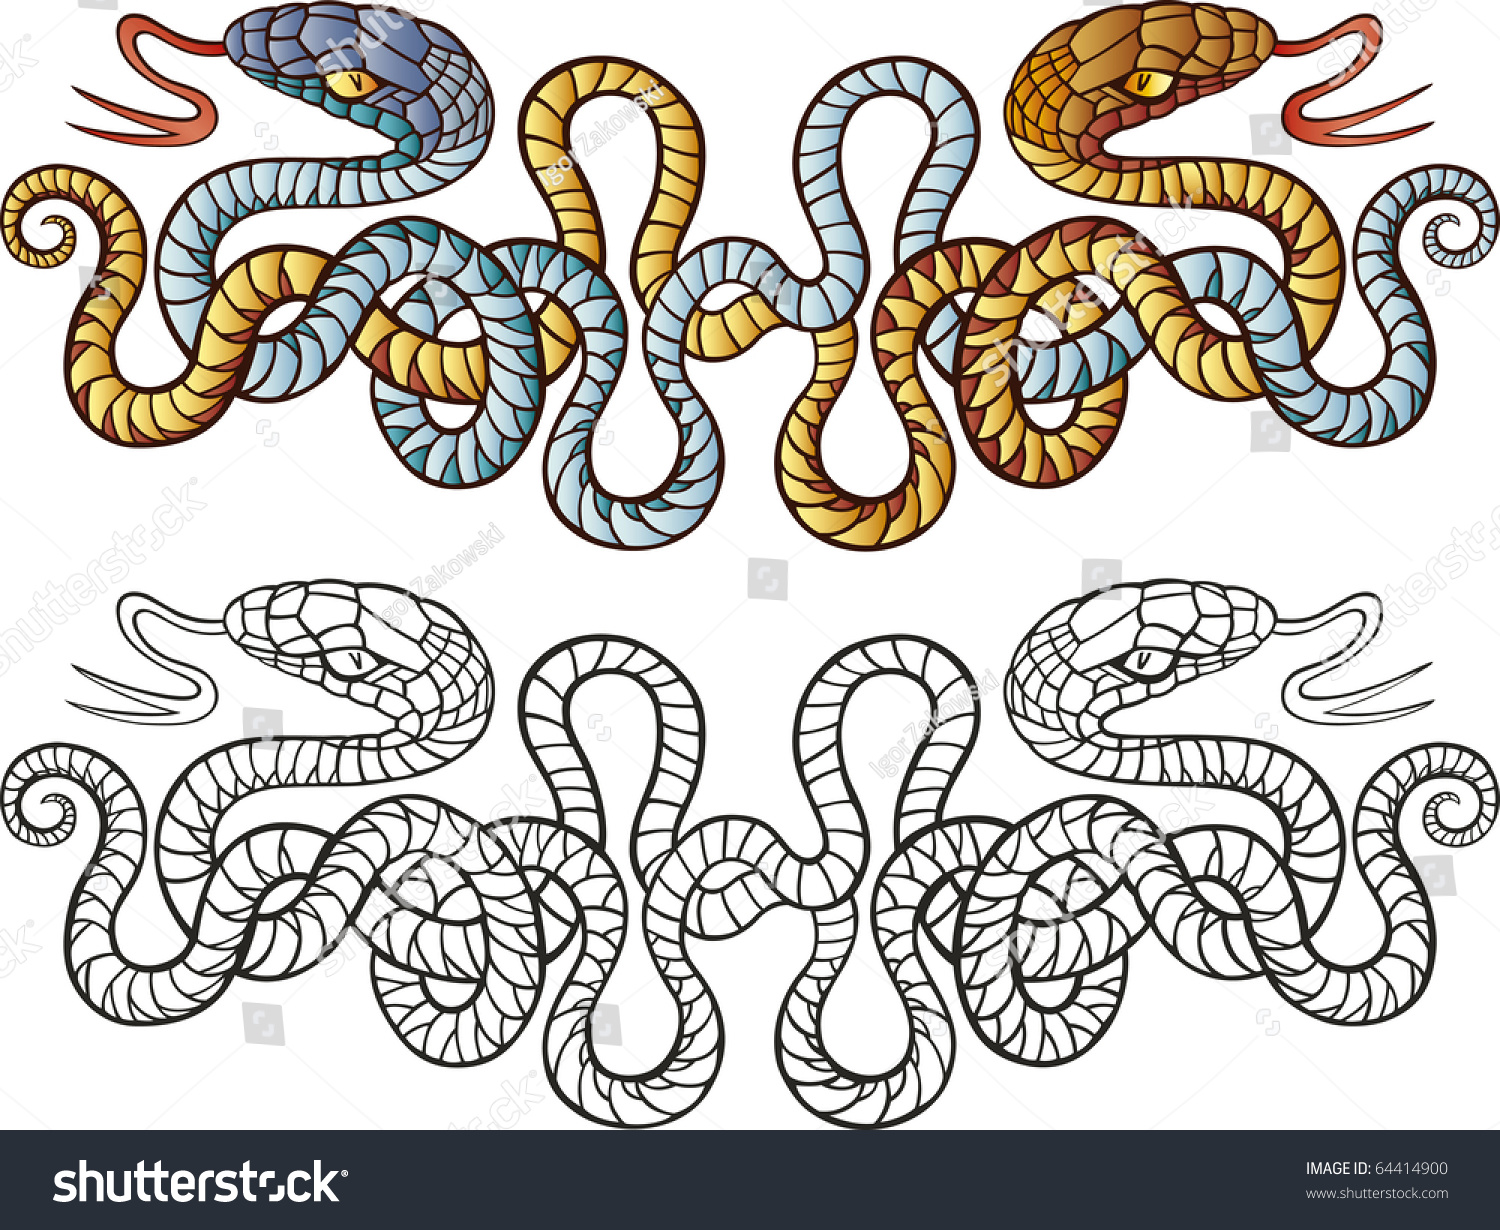 Stock Photos of snake tattoo illustration, handmade draw 